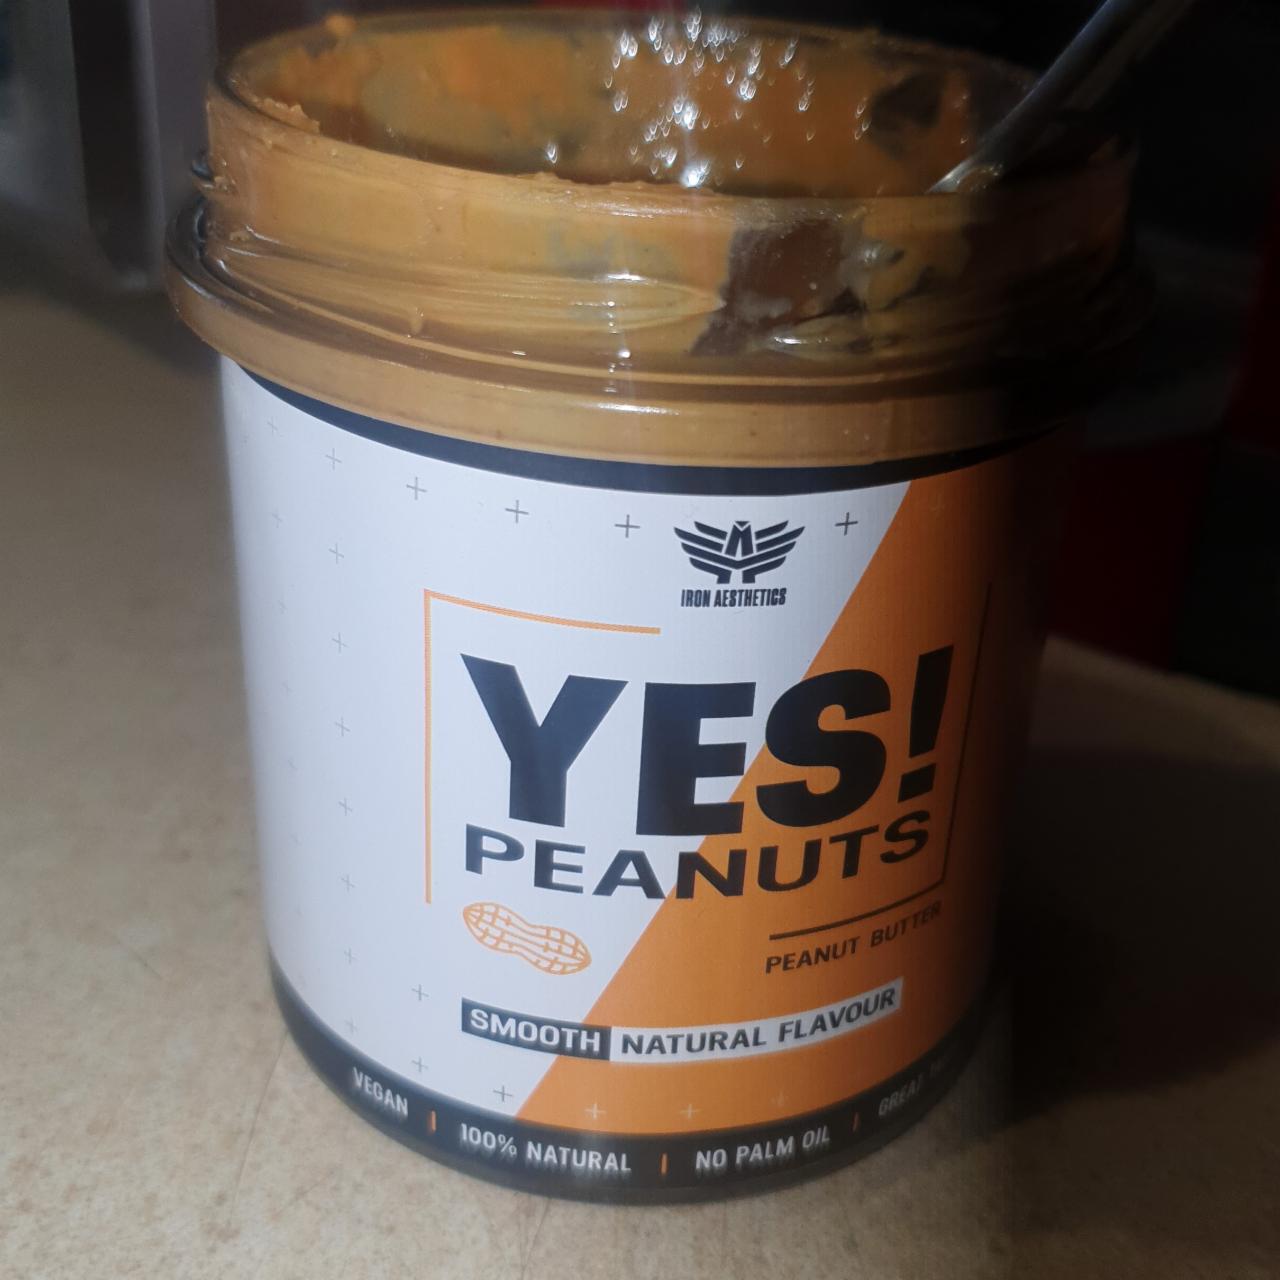 Fotografie - Yes! peanuts Peanut butter Iron Aesthetics